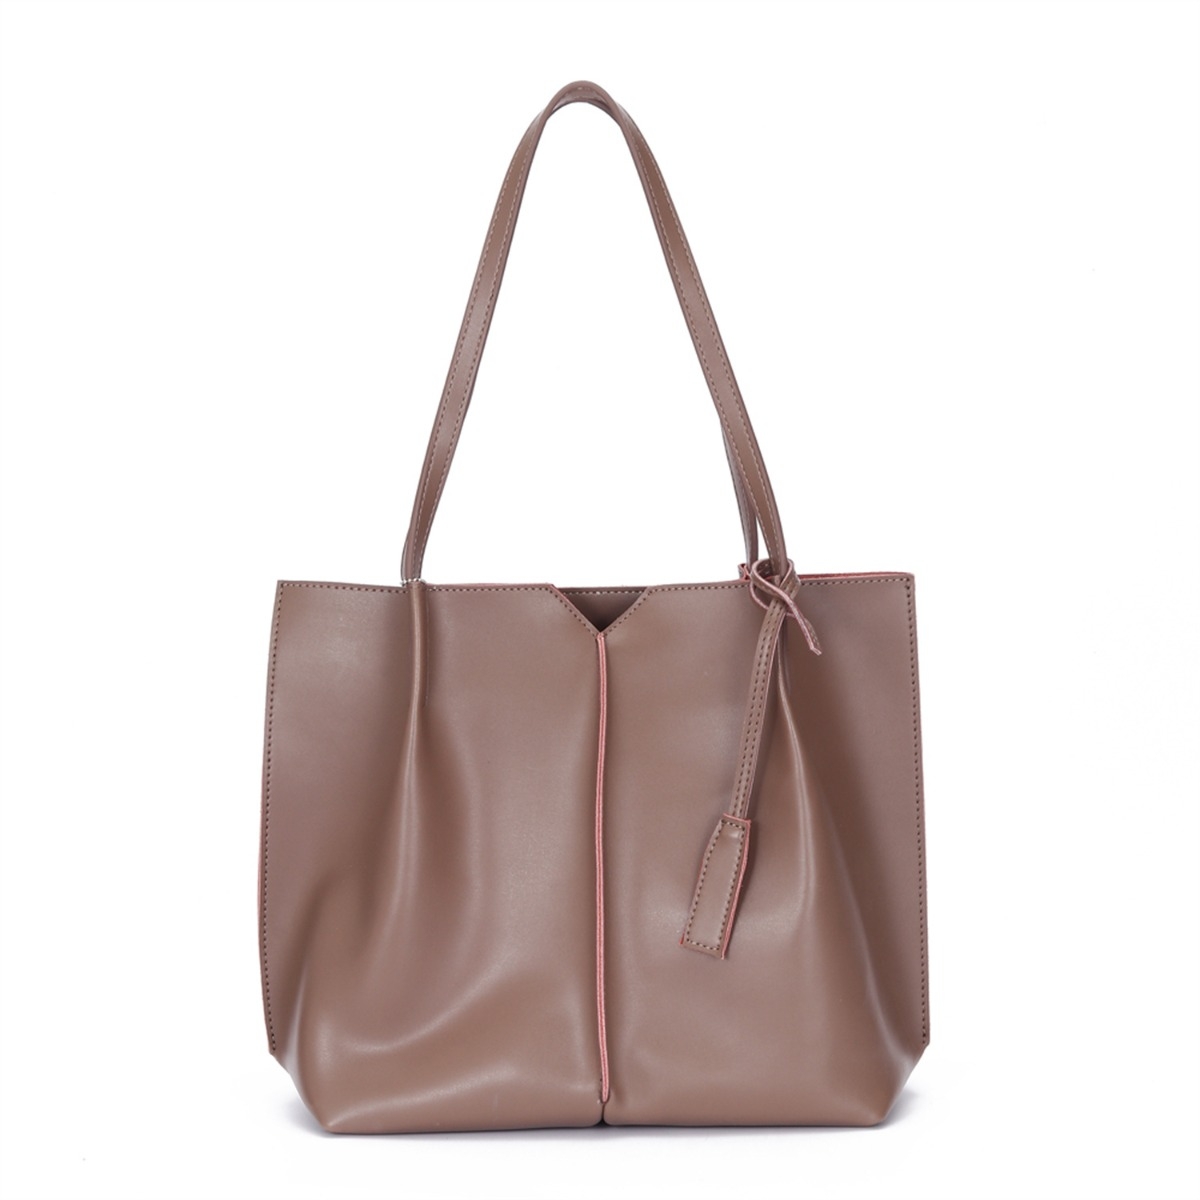 SOLN Crossbody Genuine Leather Handbag Black, Light Brown or Brown Bag Purse  New | eBay